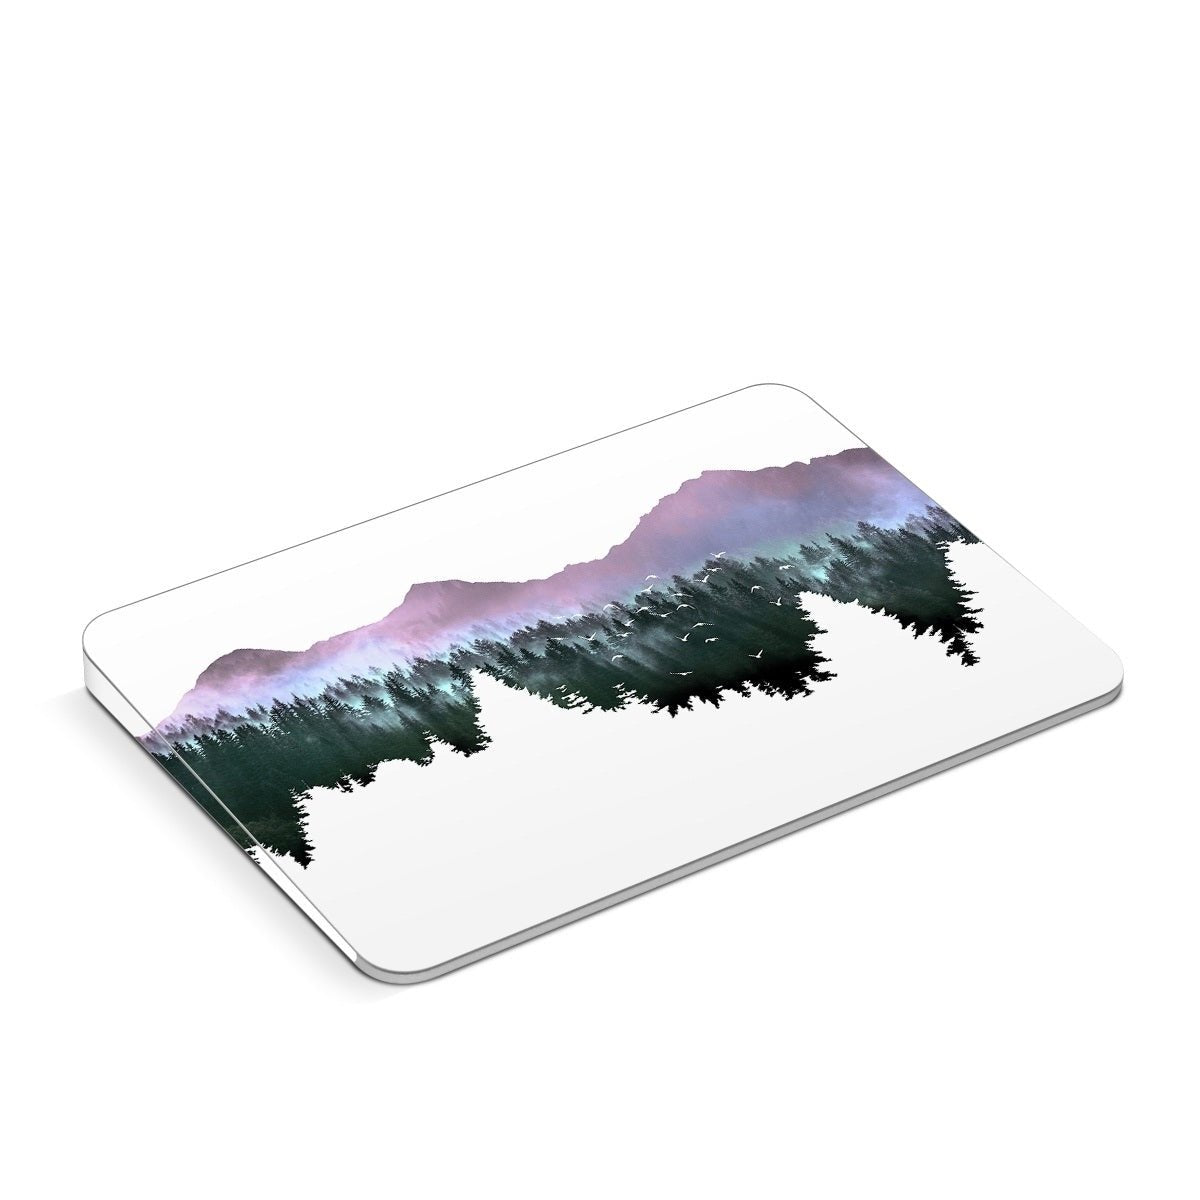 Arcane Grove - Apple Magic Trackpad Skin - Nature Revealed - DecalGirl